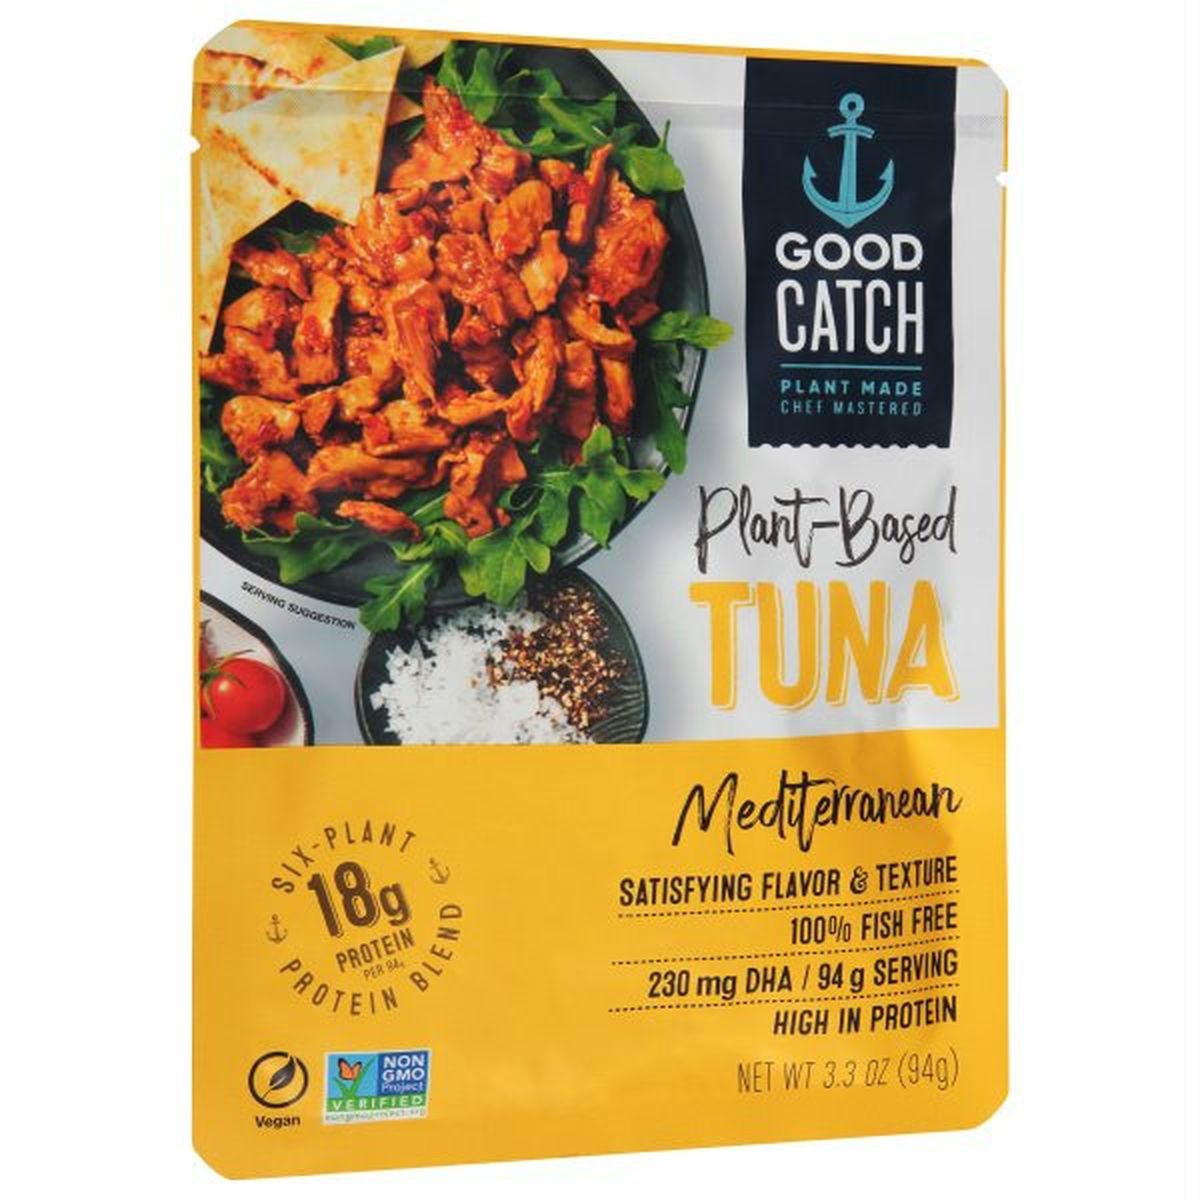 Calories in Good Catch Tuna, Mediterranean, Plant-Based